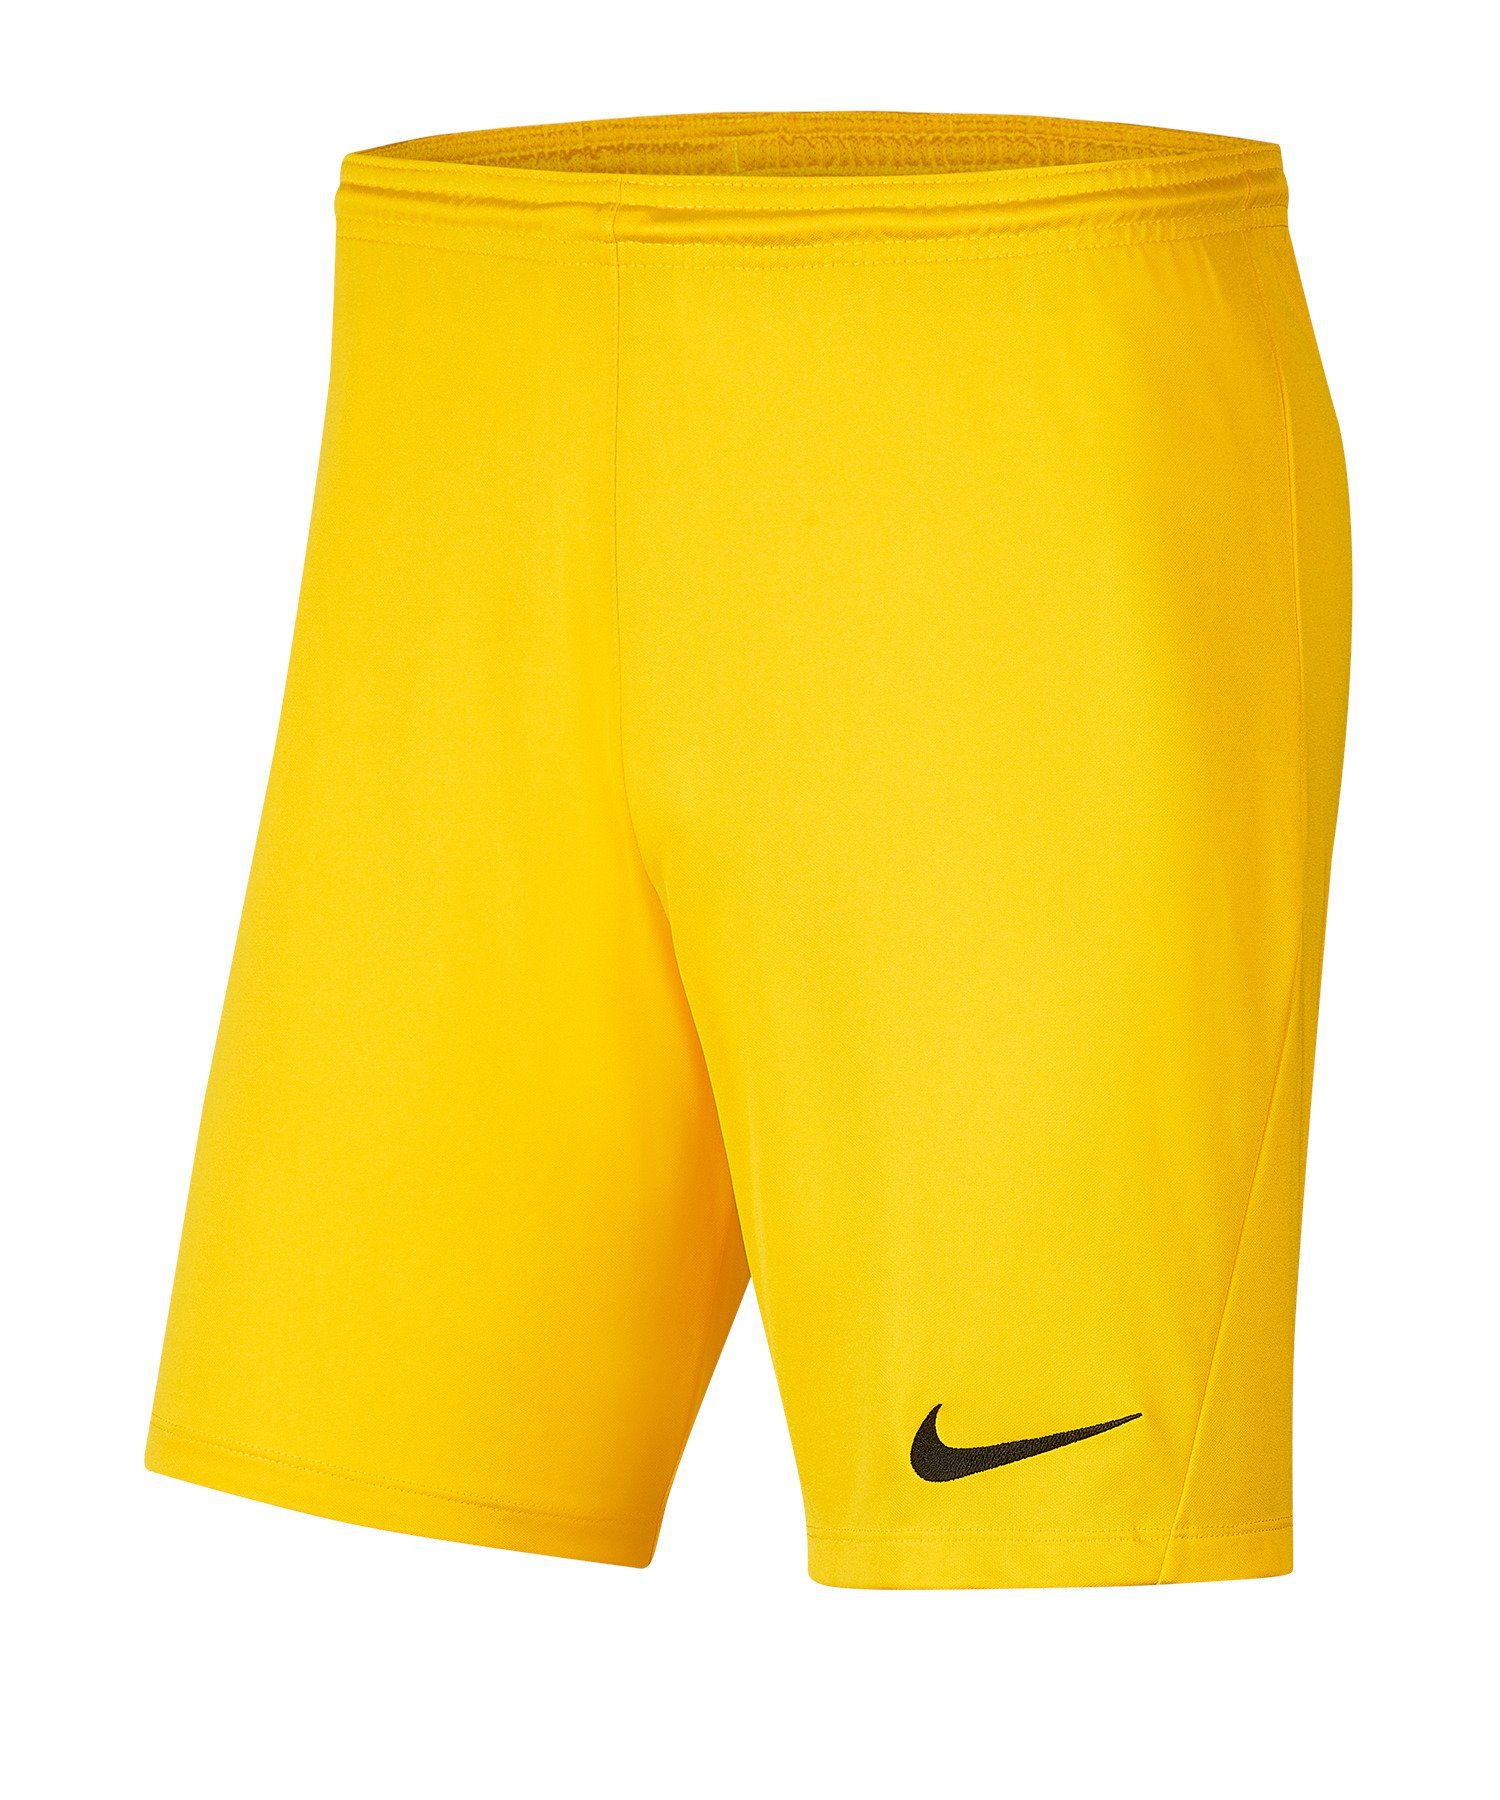 Nike Sporthose Park III Short gelbschwarzgelb | Turnhosen